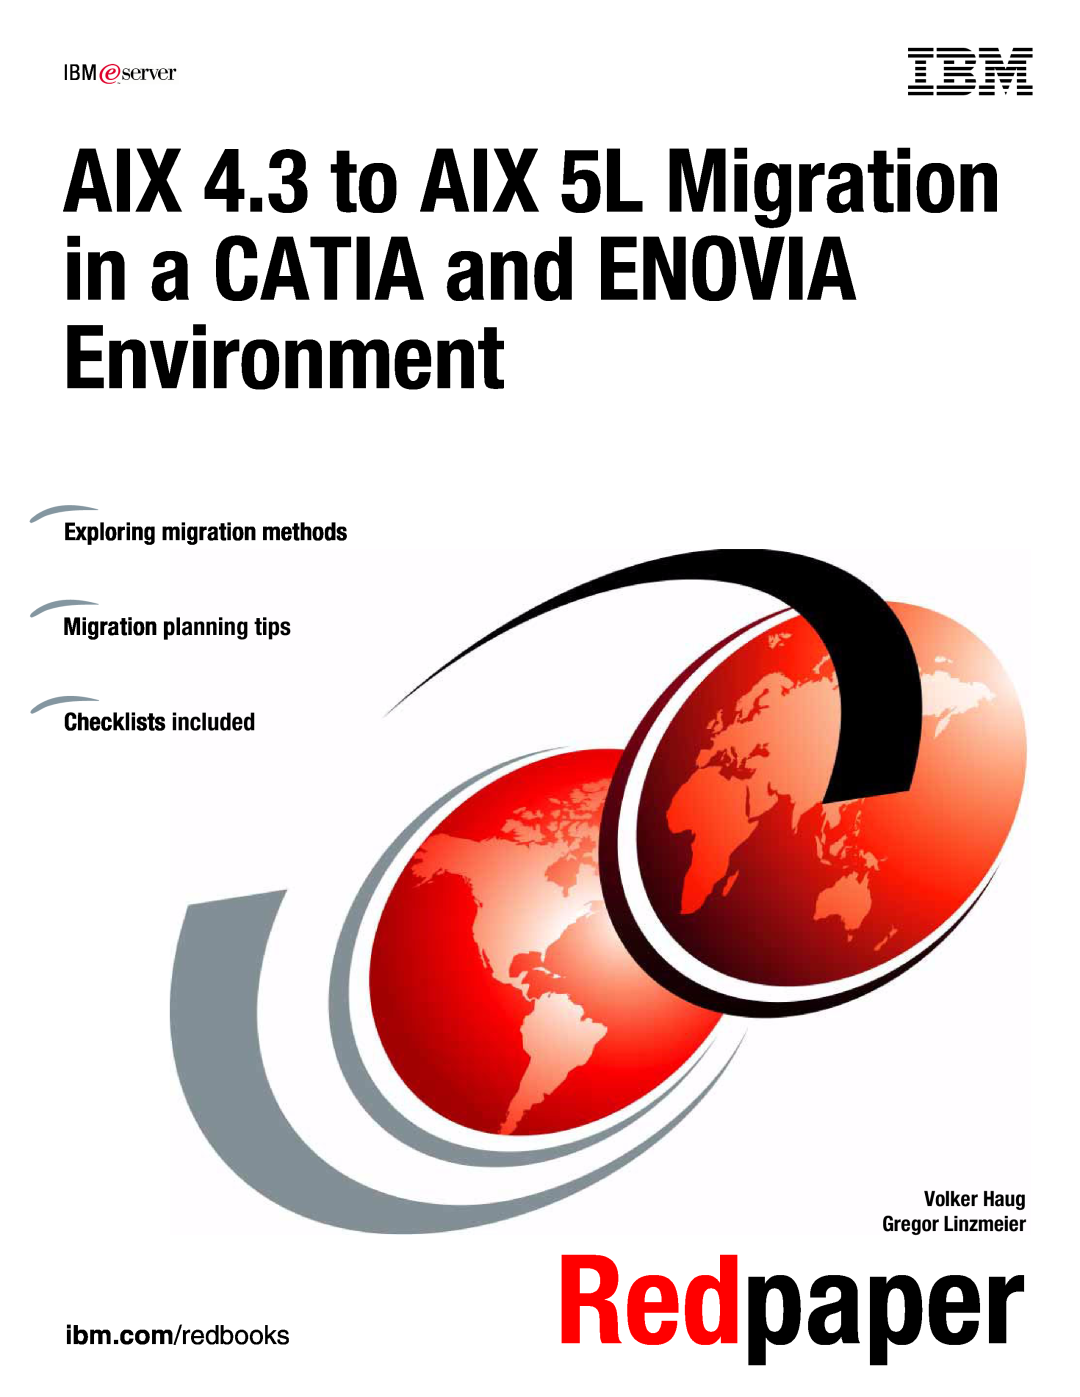 IBM AIX 4.3 manual Volker Haug Gregor Linzmeier, Exploring migration methods, Migration planning tips Checklists included 